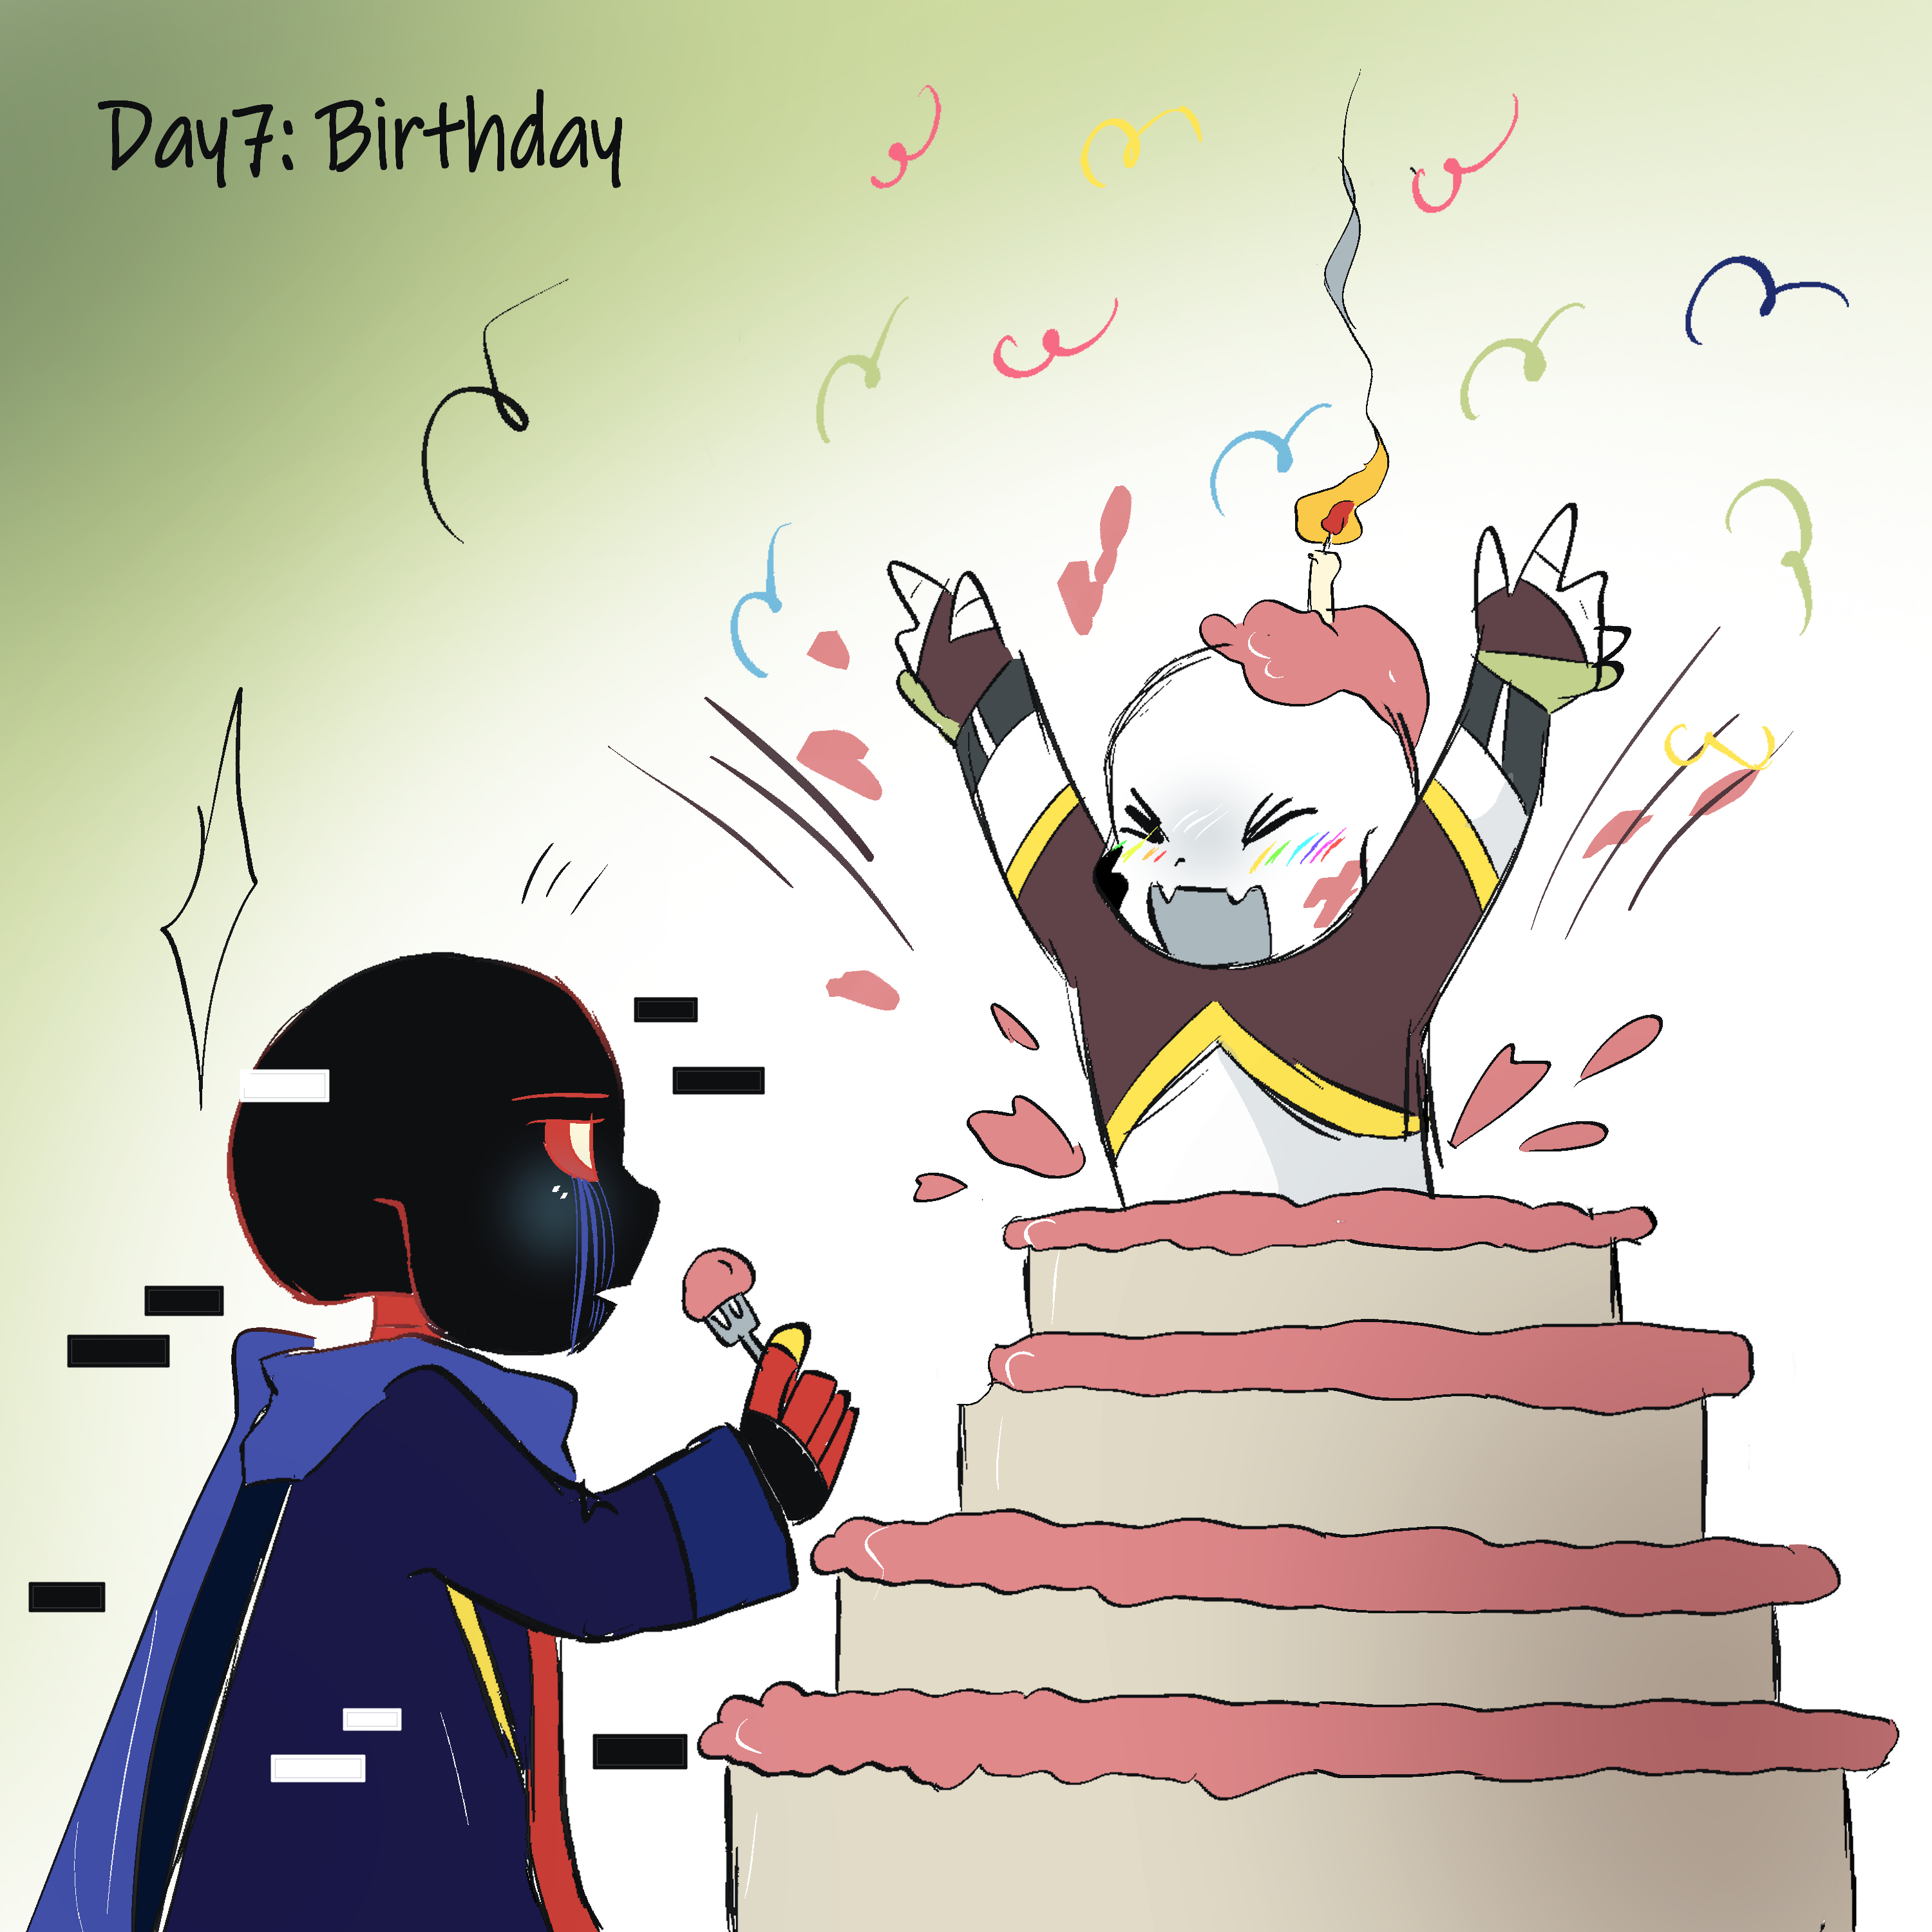 Happy Birthday Dream & Nightmare!, Joku